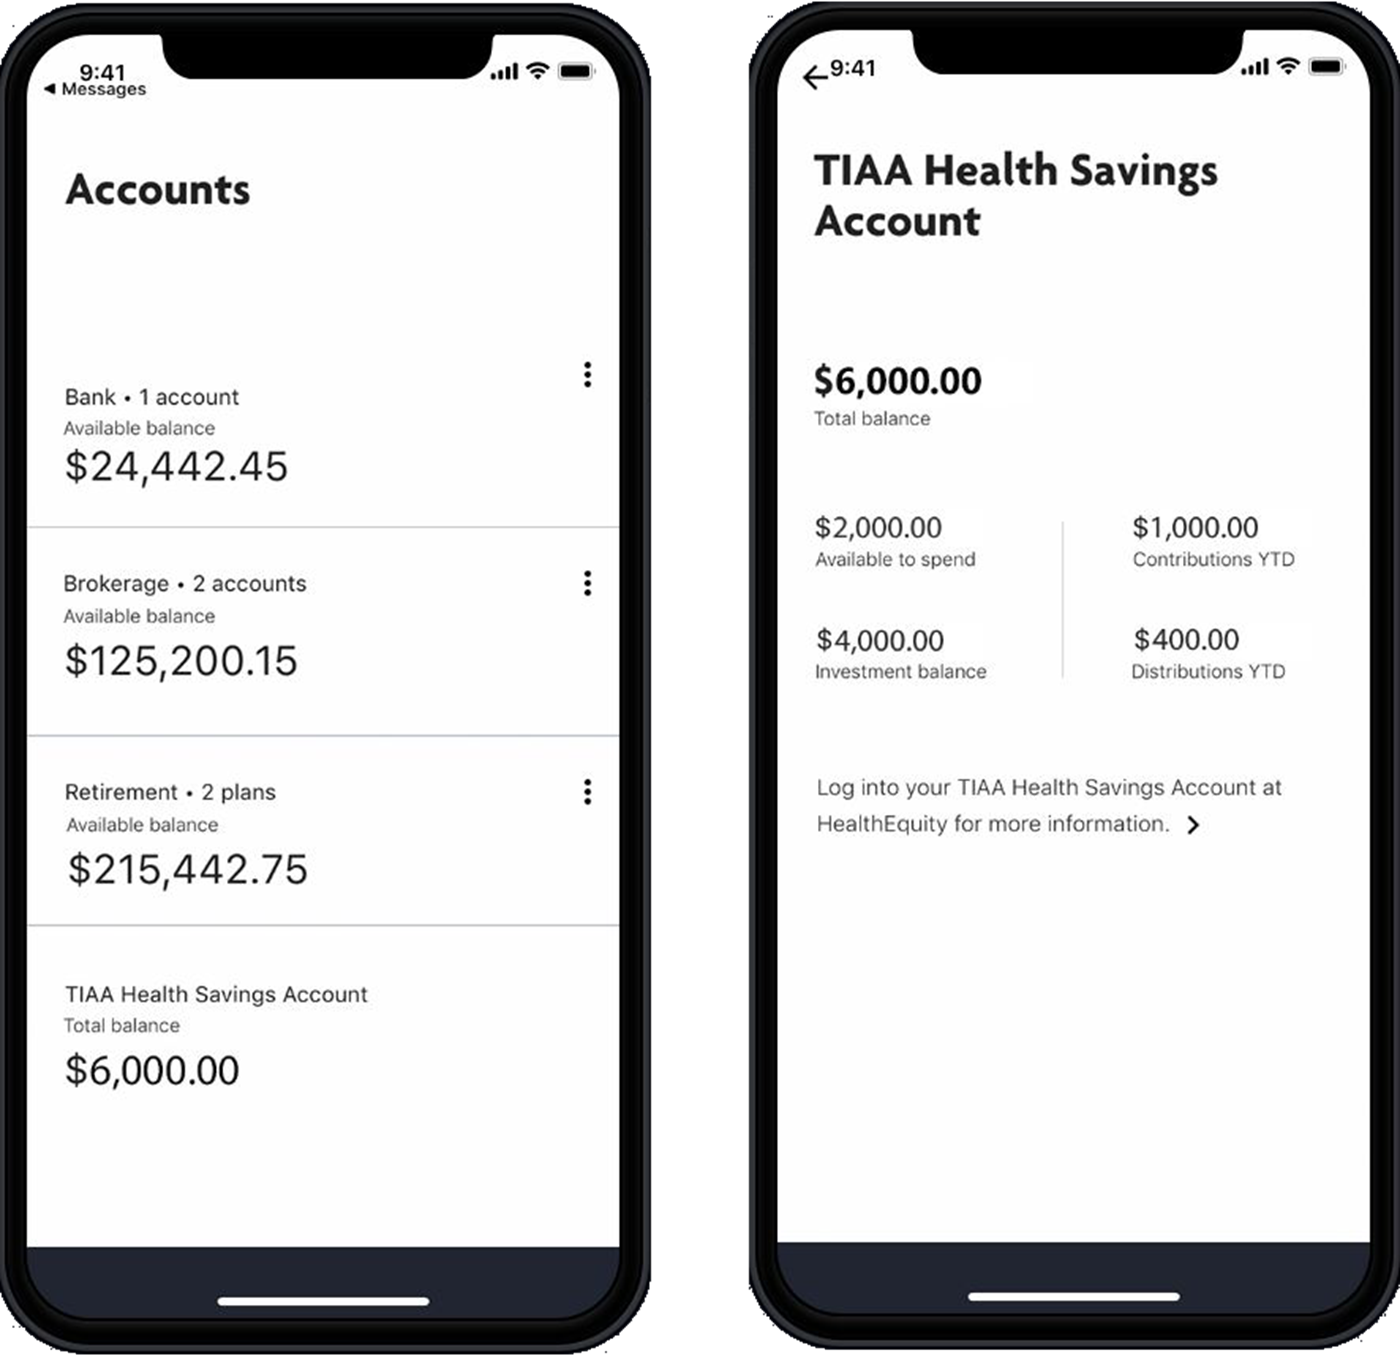 TIAA Health Savings Account.